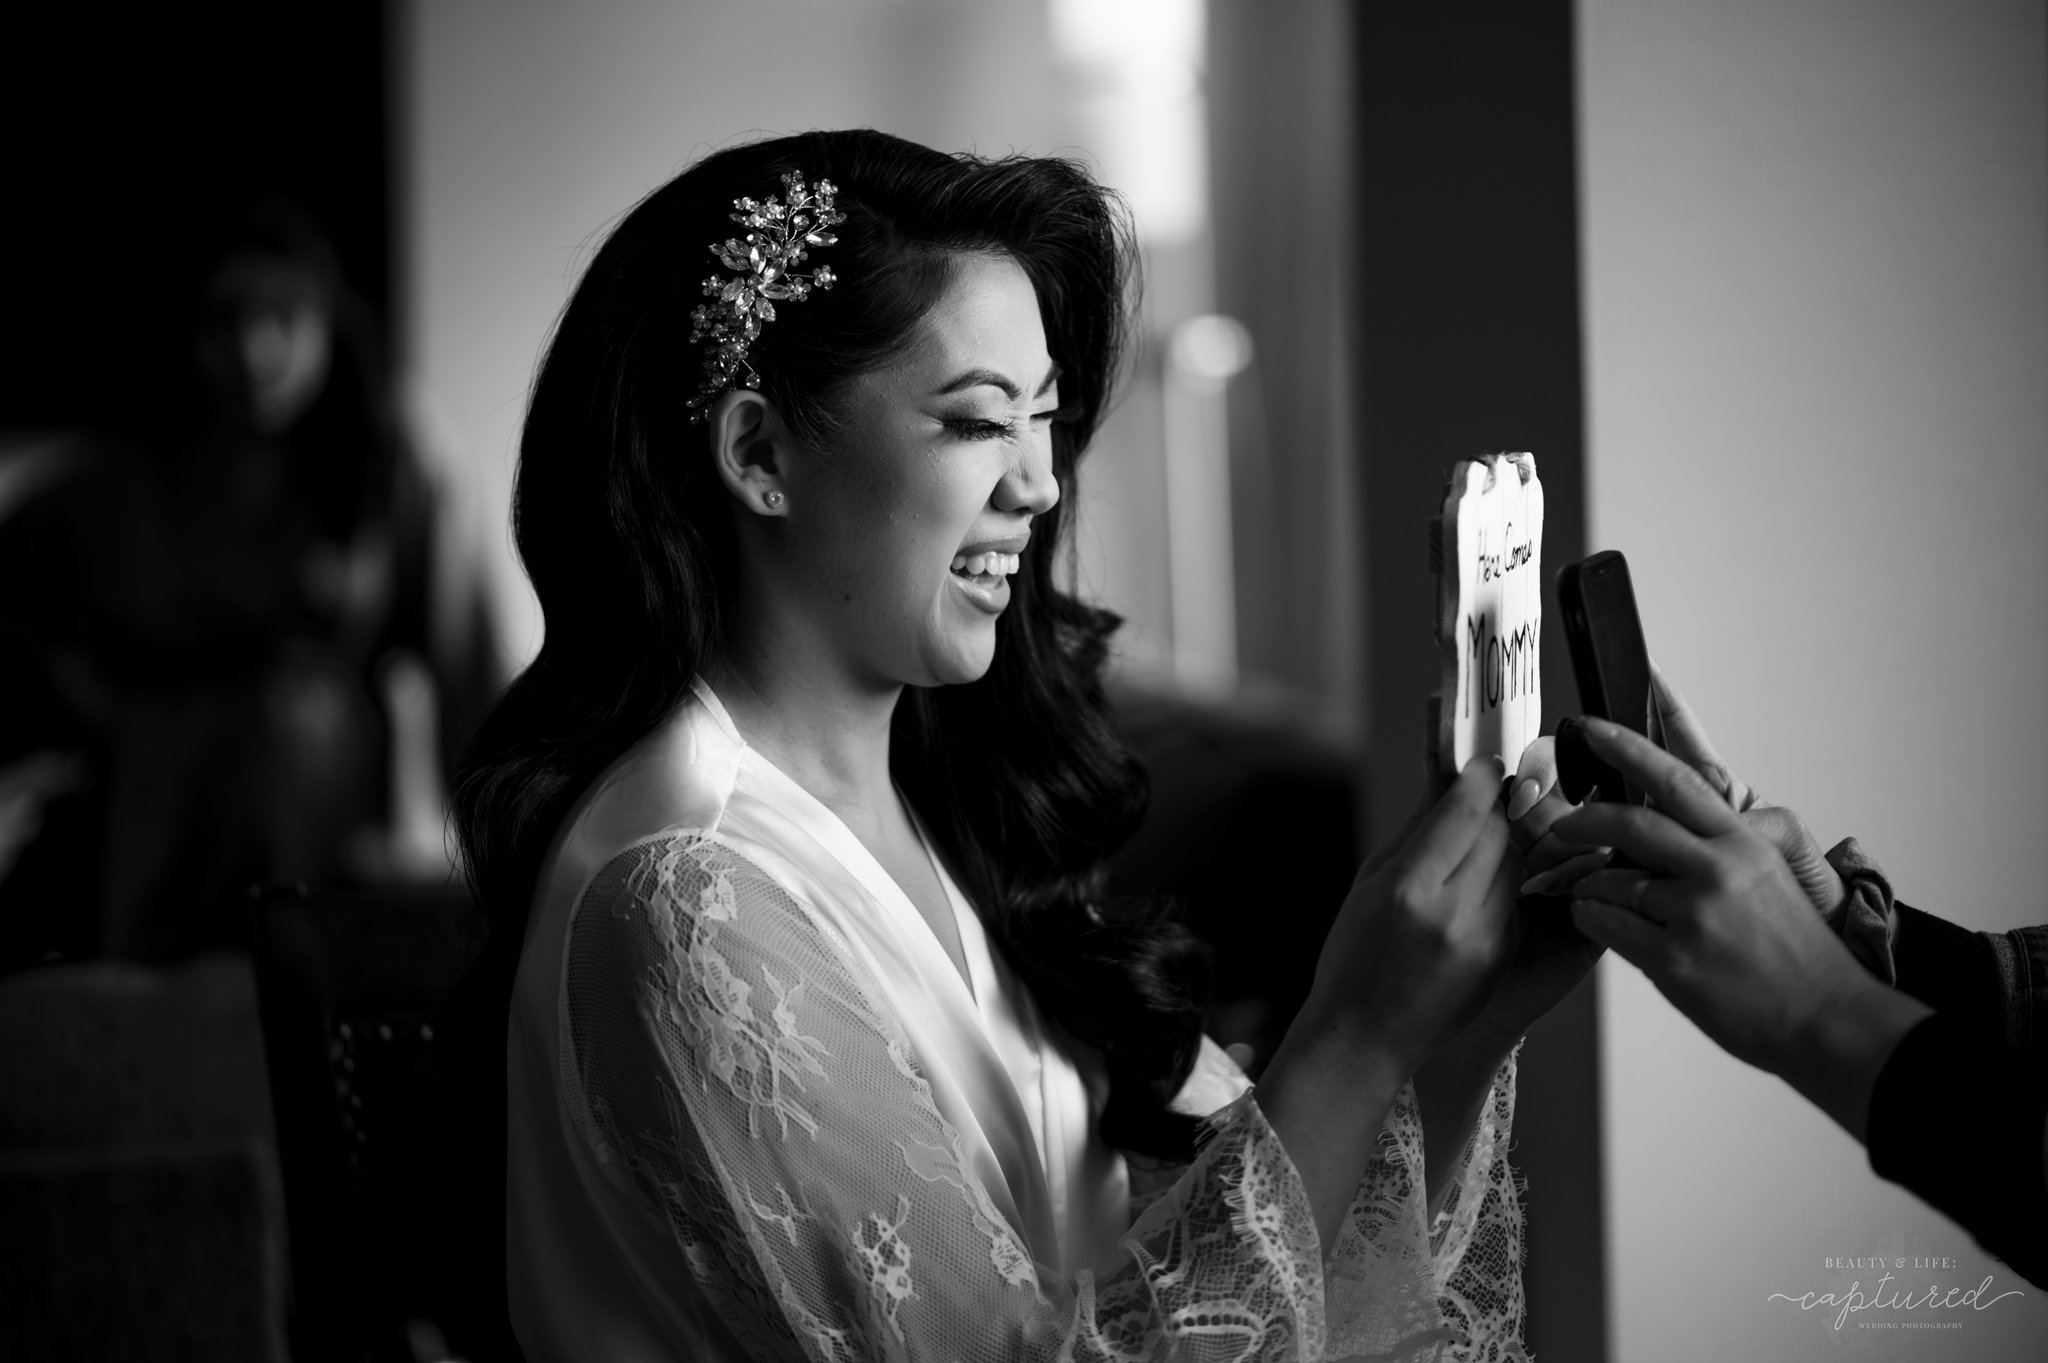 Beauty_and_Life_Captured_Jasmine_Bolinao_Wedding_Test-16.jpg